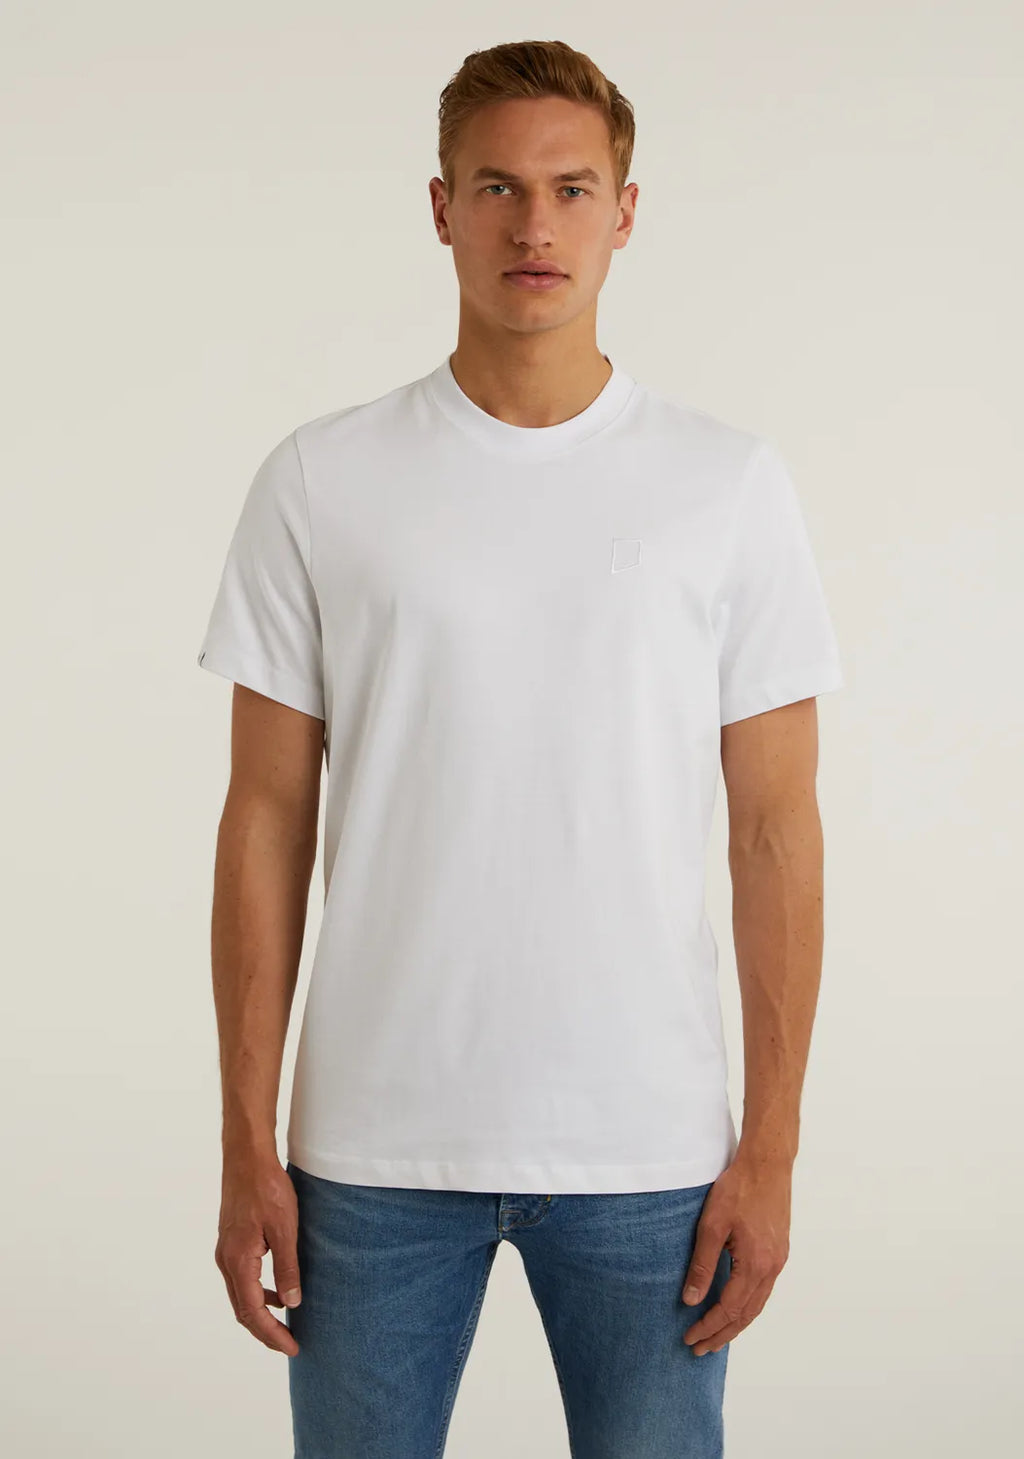 Shop Online T-Shirts – Yeans Halle